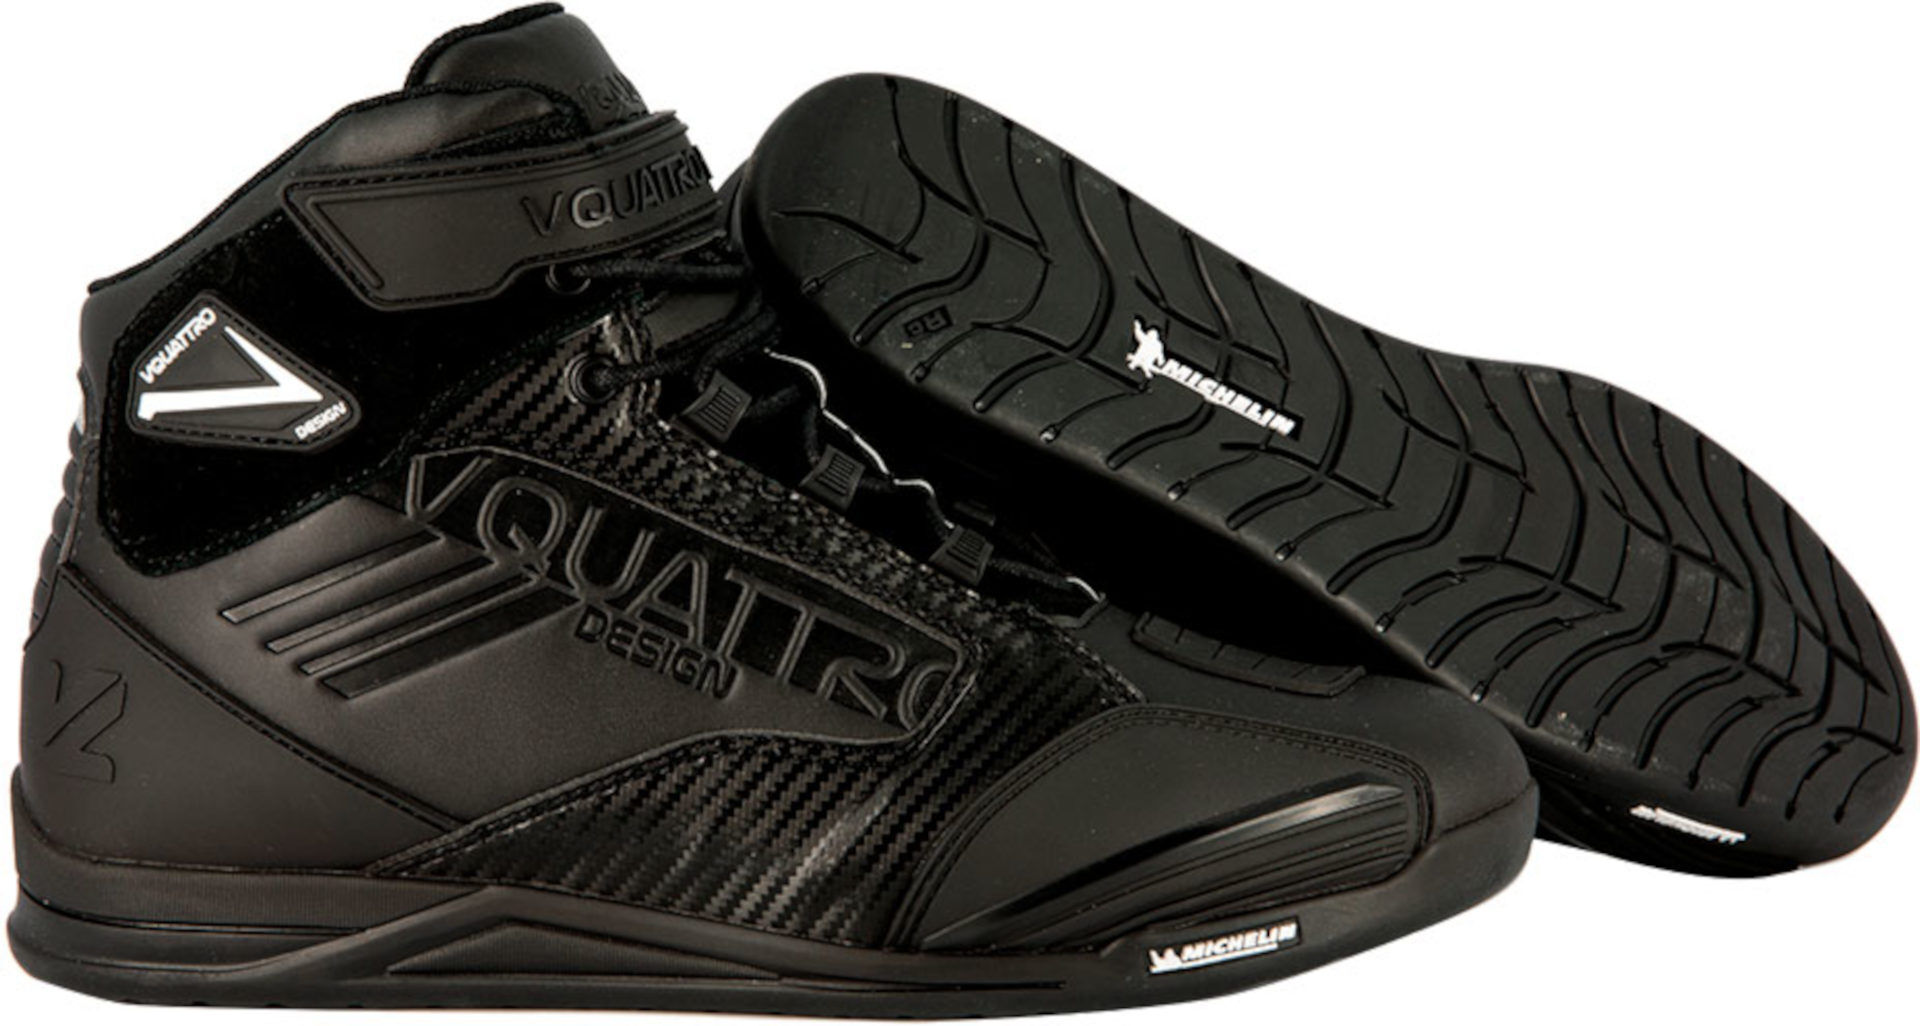 Vquattro Design SBK 20 Motocyklové boty 43 Černá Bílá